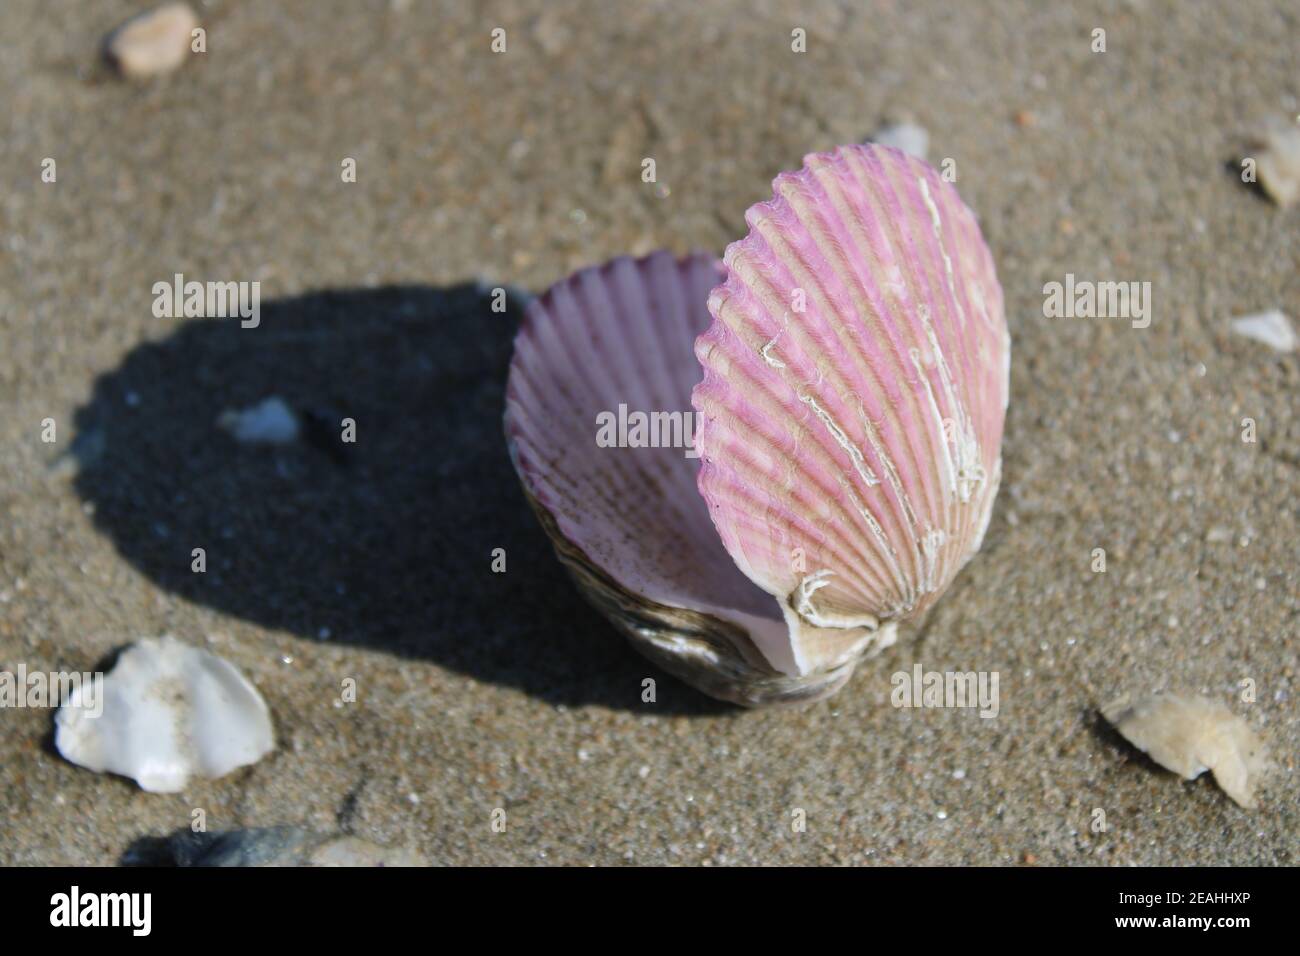 Purple scallop shells casting shadow on sandy beach Stock Photo